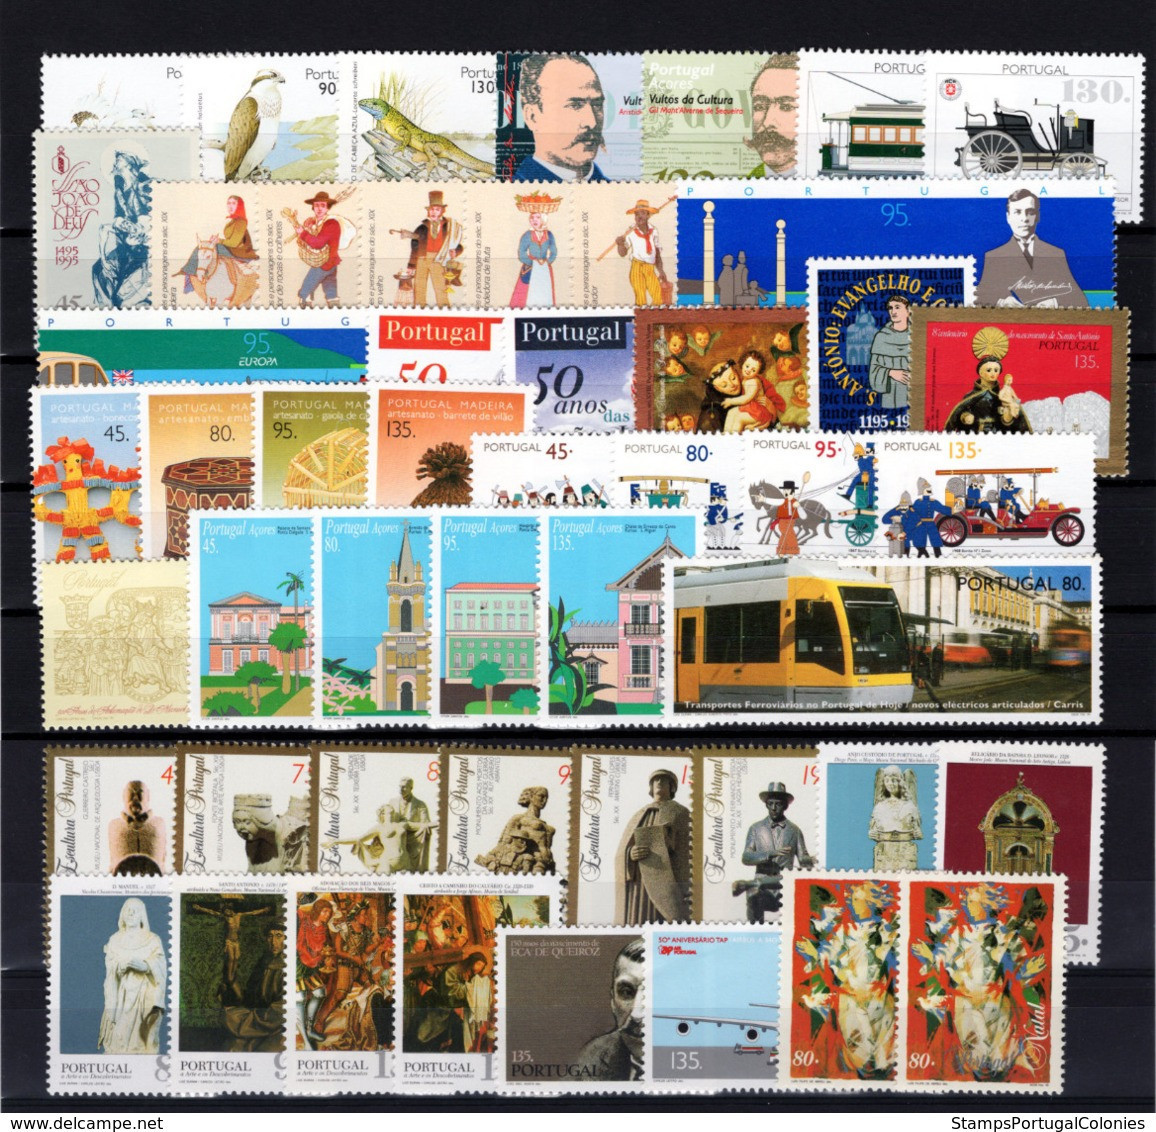 1995 Portugal Azores Madeira Complete Year MNH Stamps. Année Compléte NeufSansCharnière. Ano Completo Novo Sem Charneira - Années Complètes